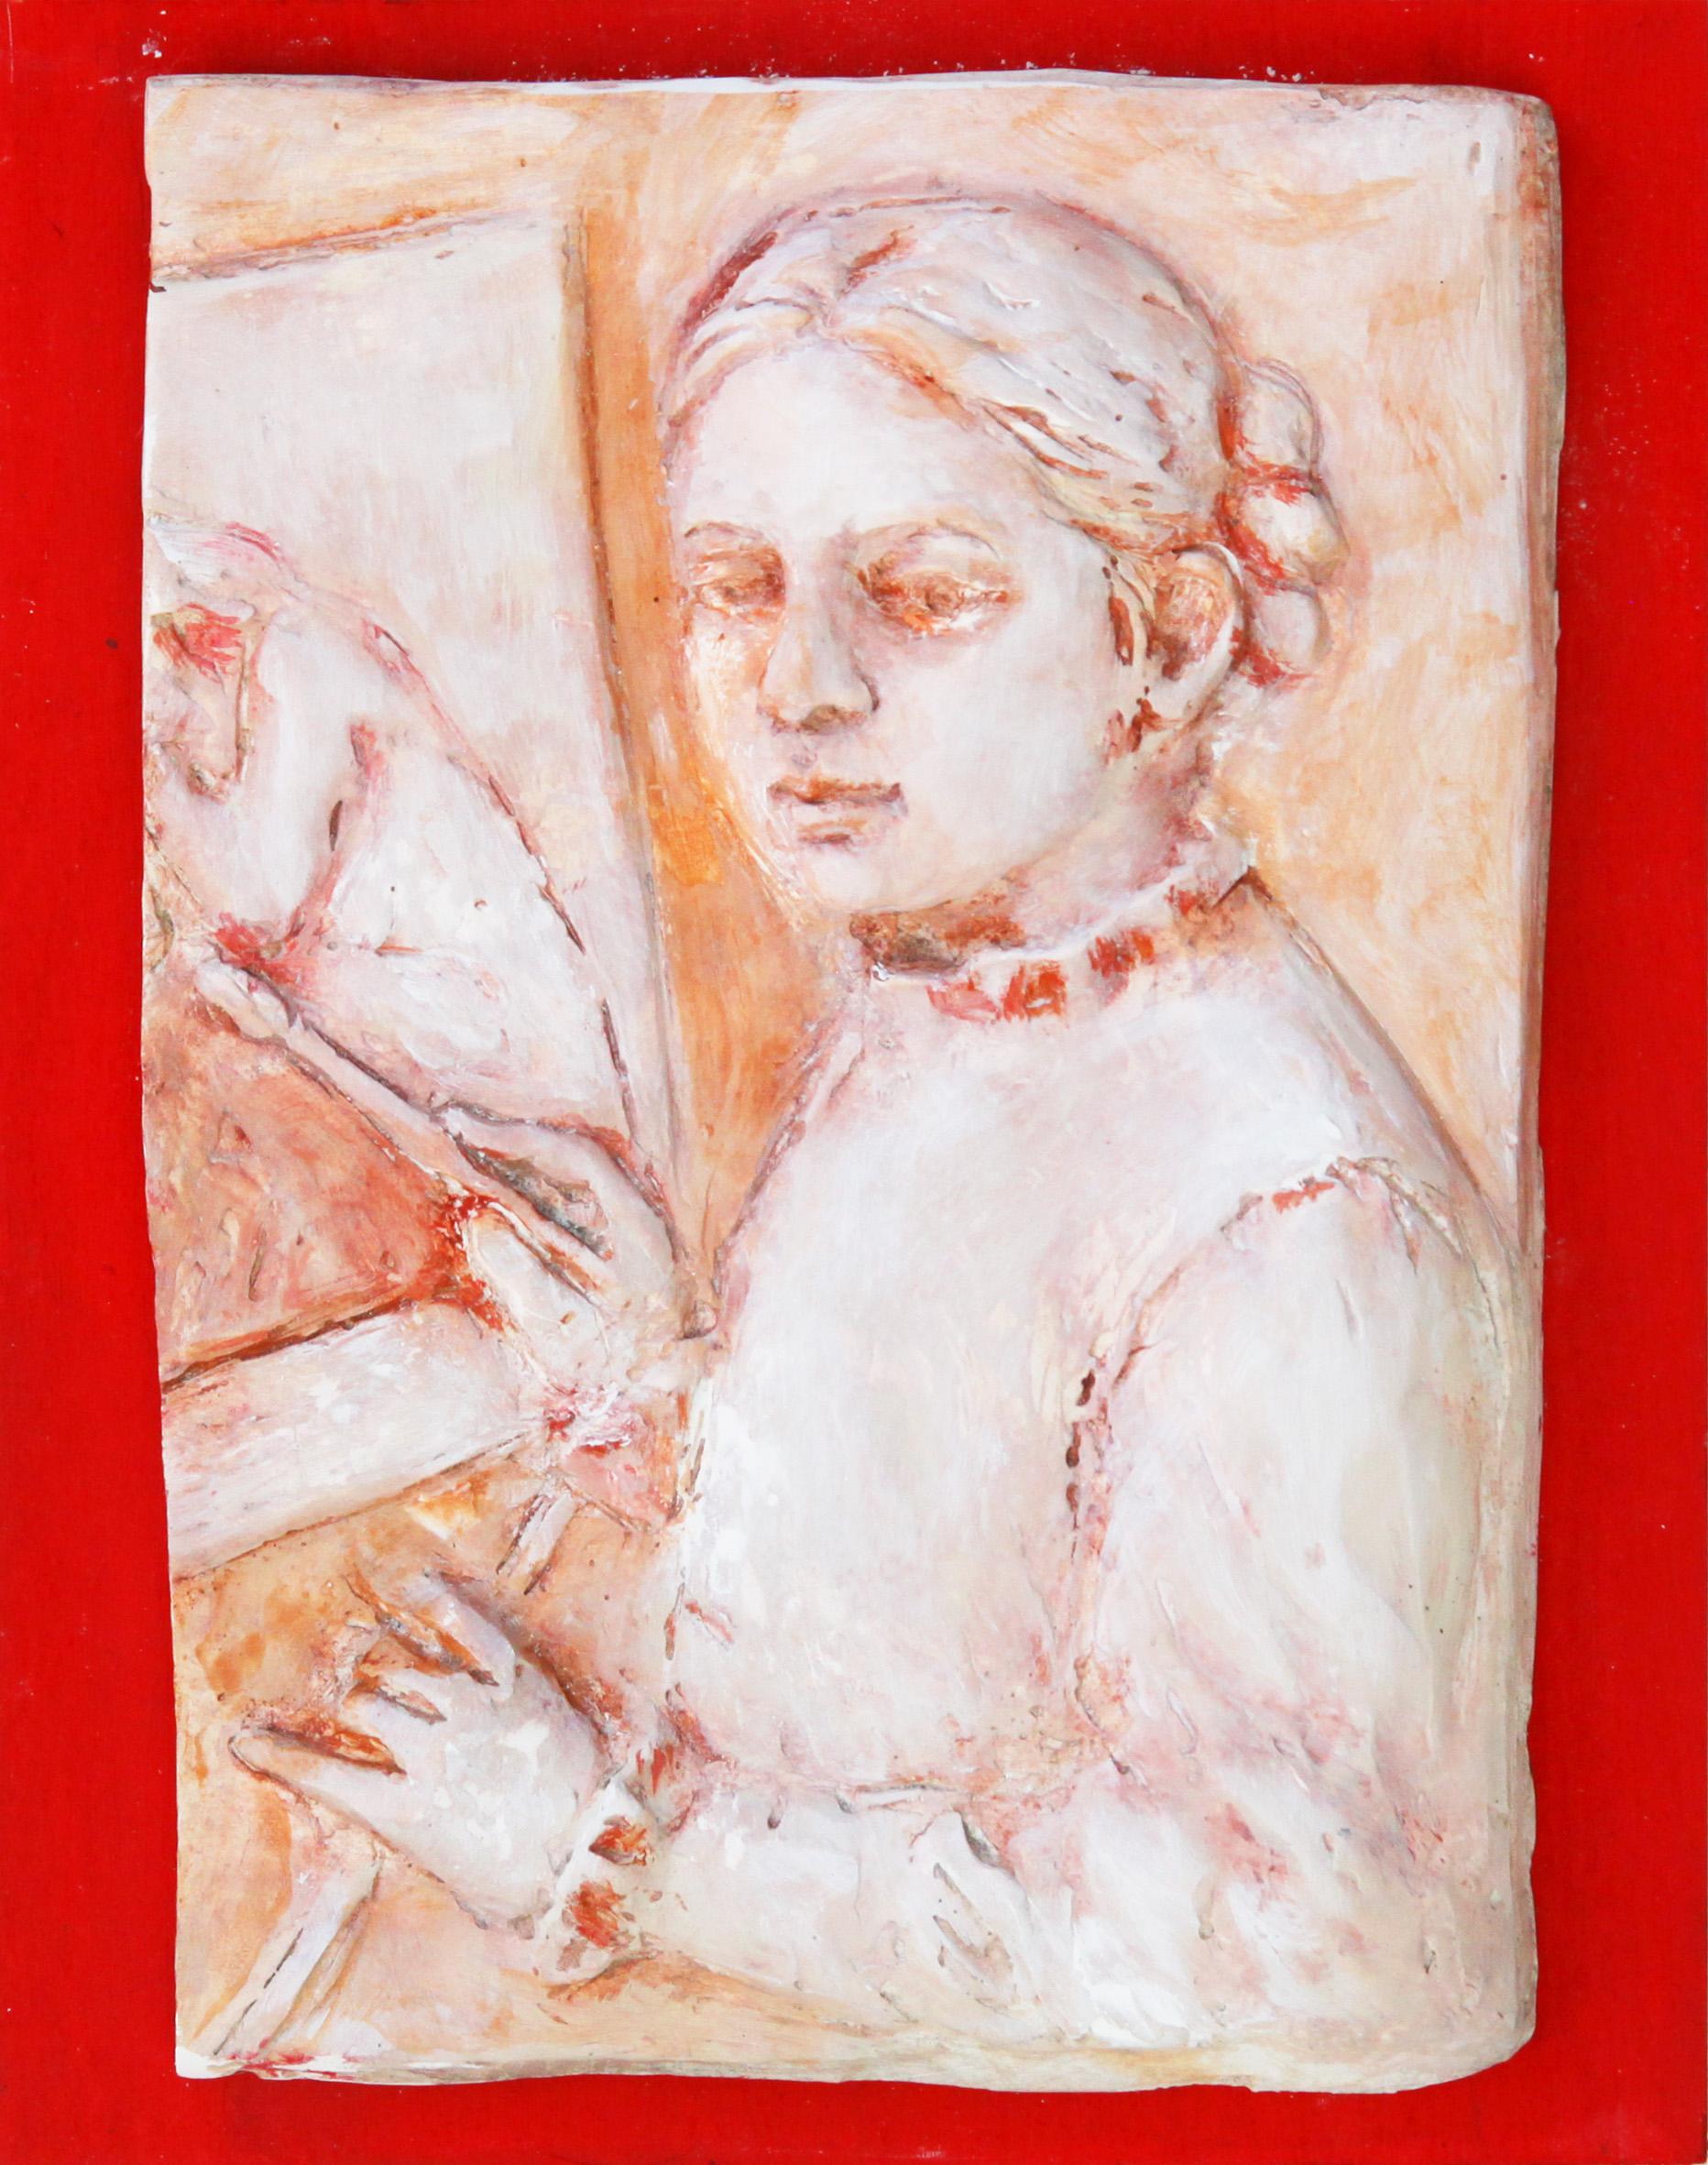 Mary Buckman Figurative Sculpture - Small Portrait Relief, "Sofonisba" 2022